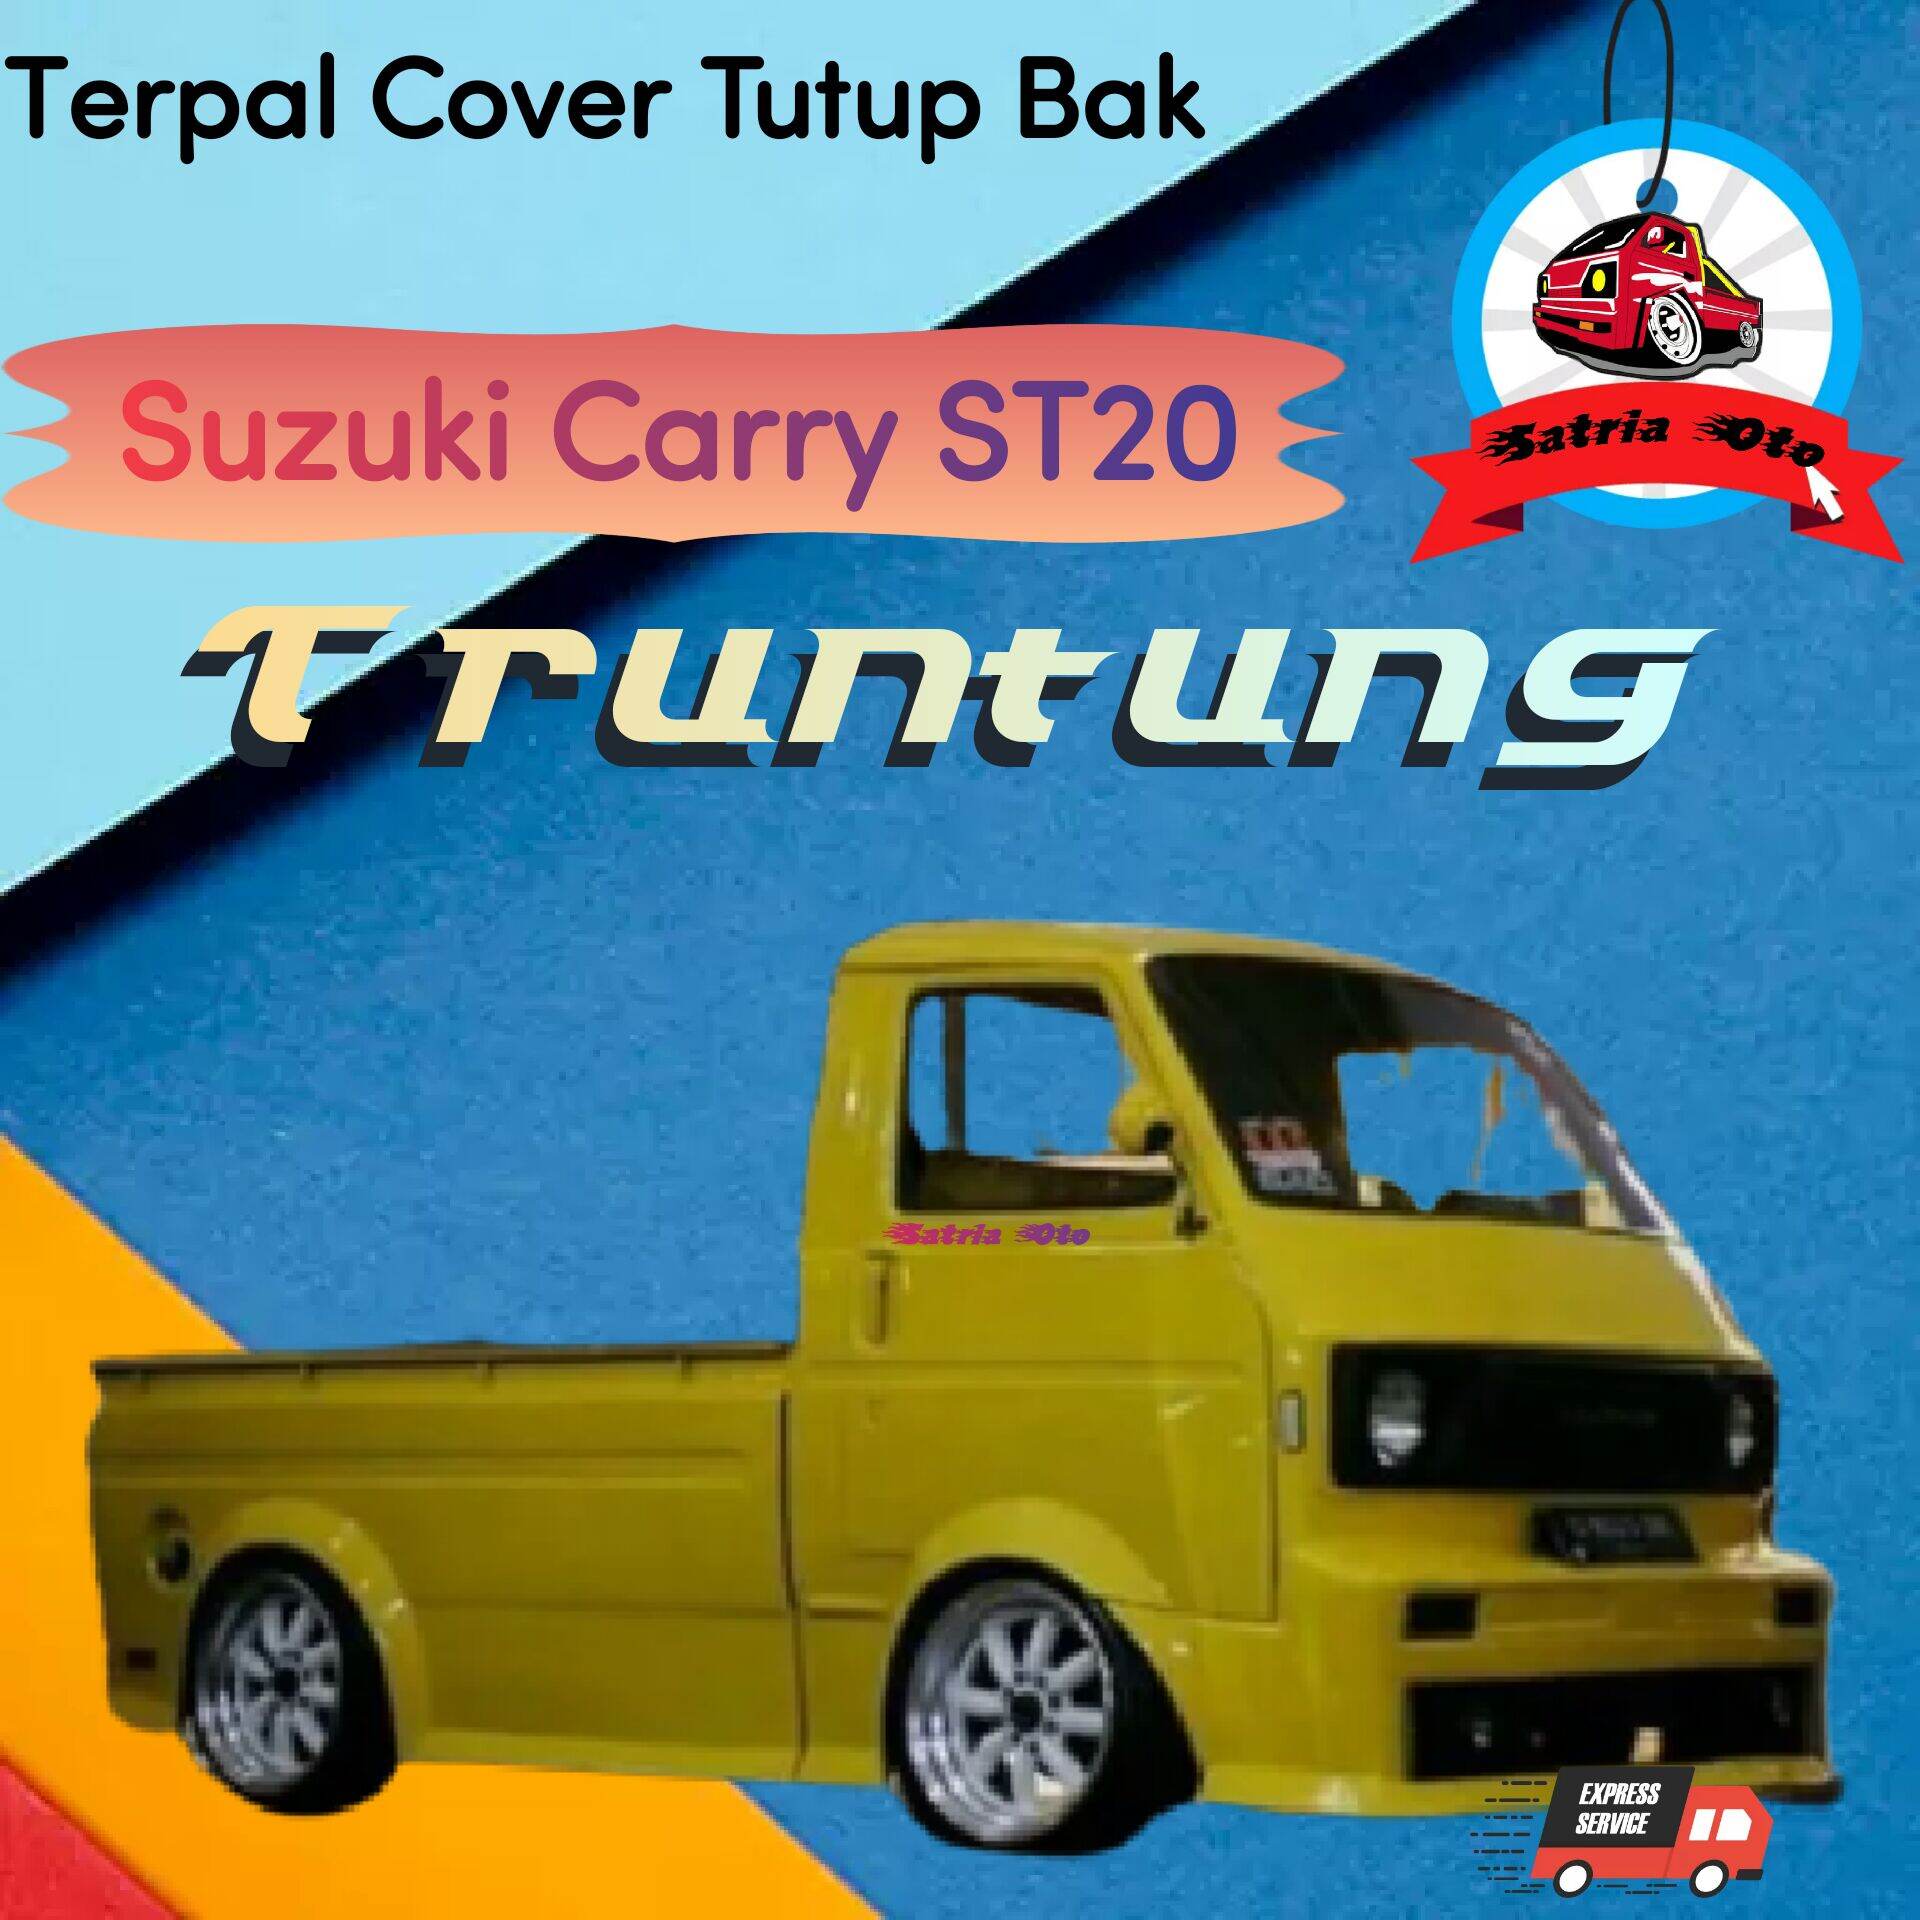 Terpal Cover Tutup Bak Pick Up Suzuki Carry St20 Truntung Lazada Indonesia